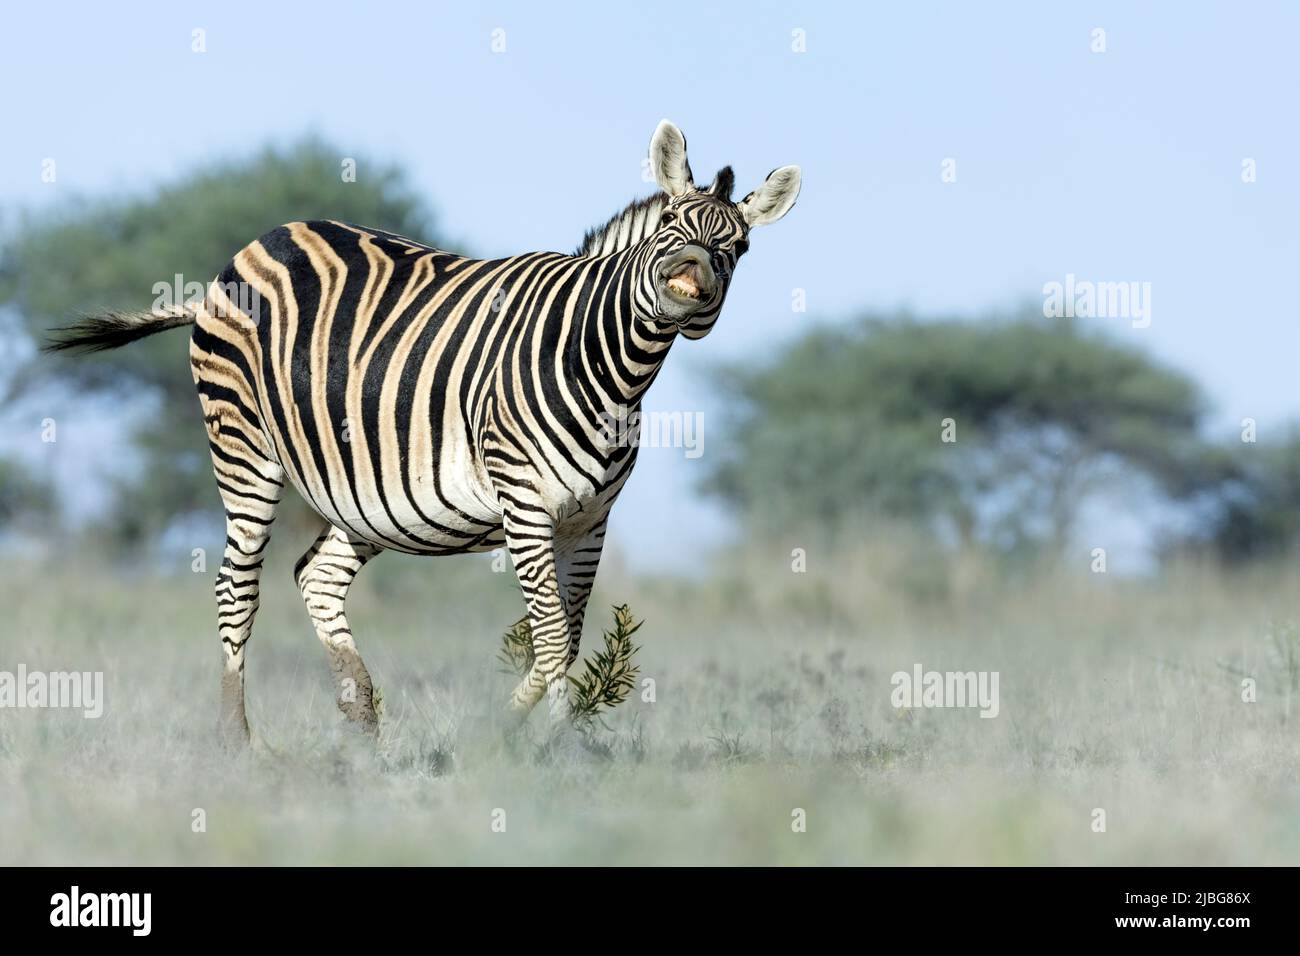 Zebra in kalahari smiling playing with Acacia backdrop in grassland savannah Stock Photo